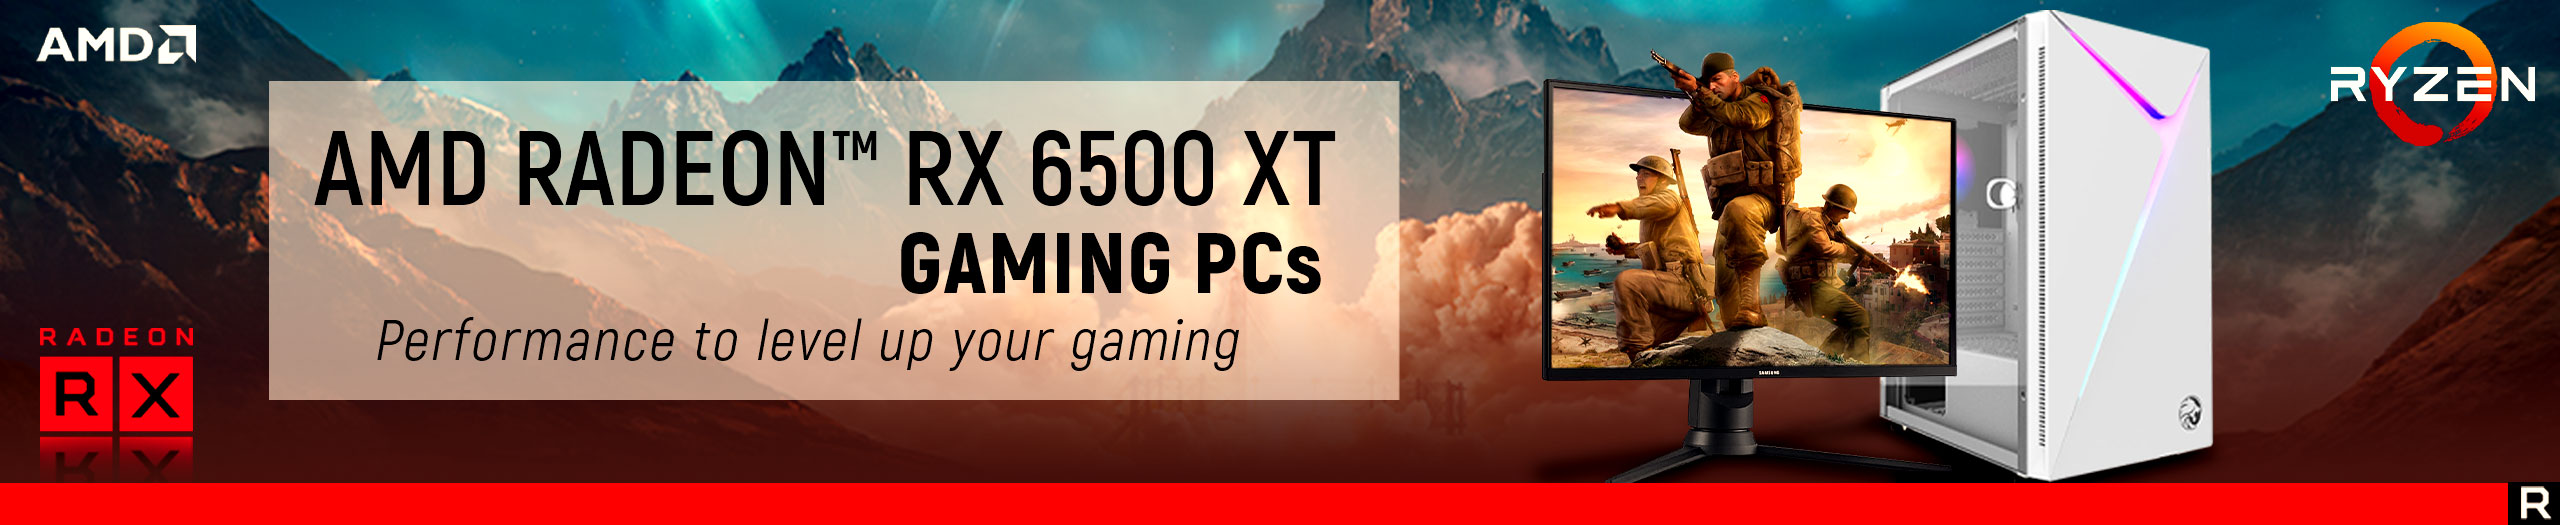 AMD Radeon RX 6500 Gaming PCs